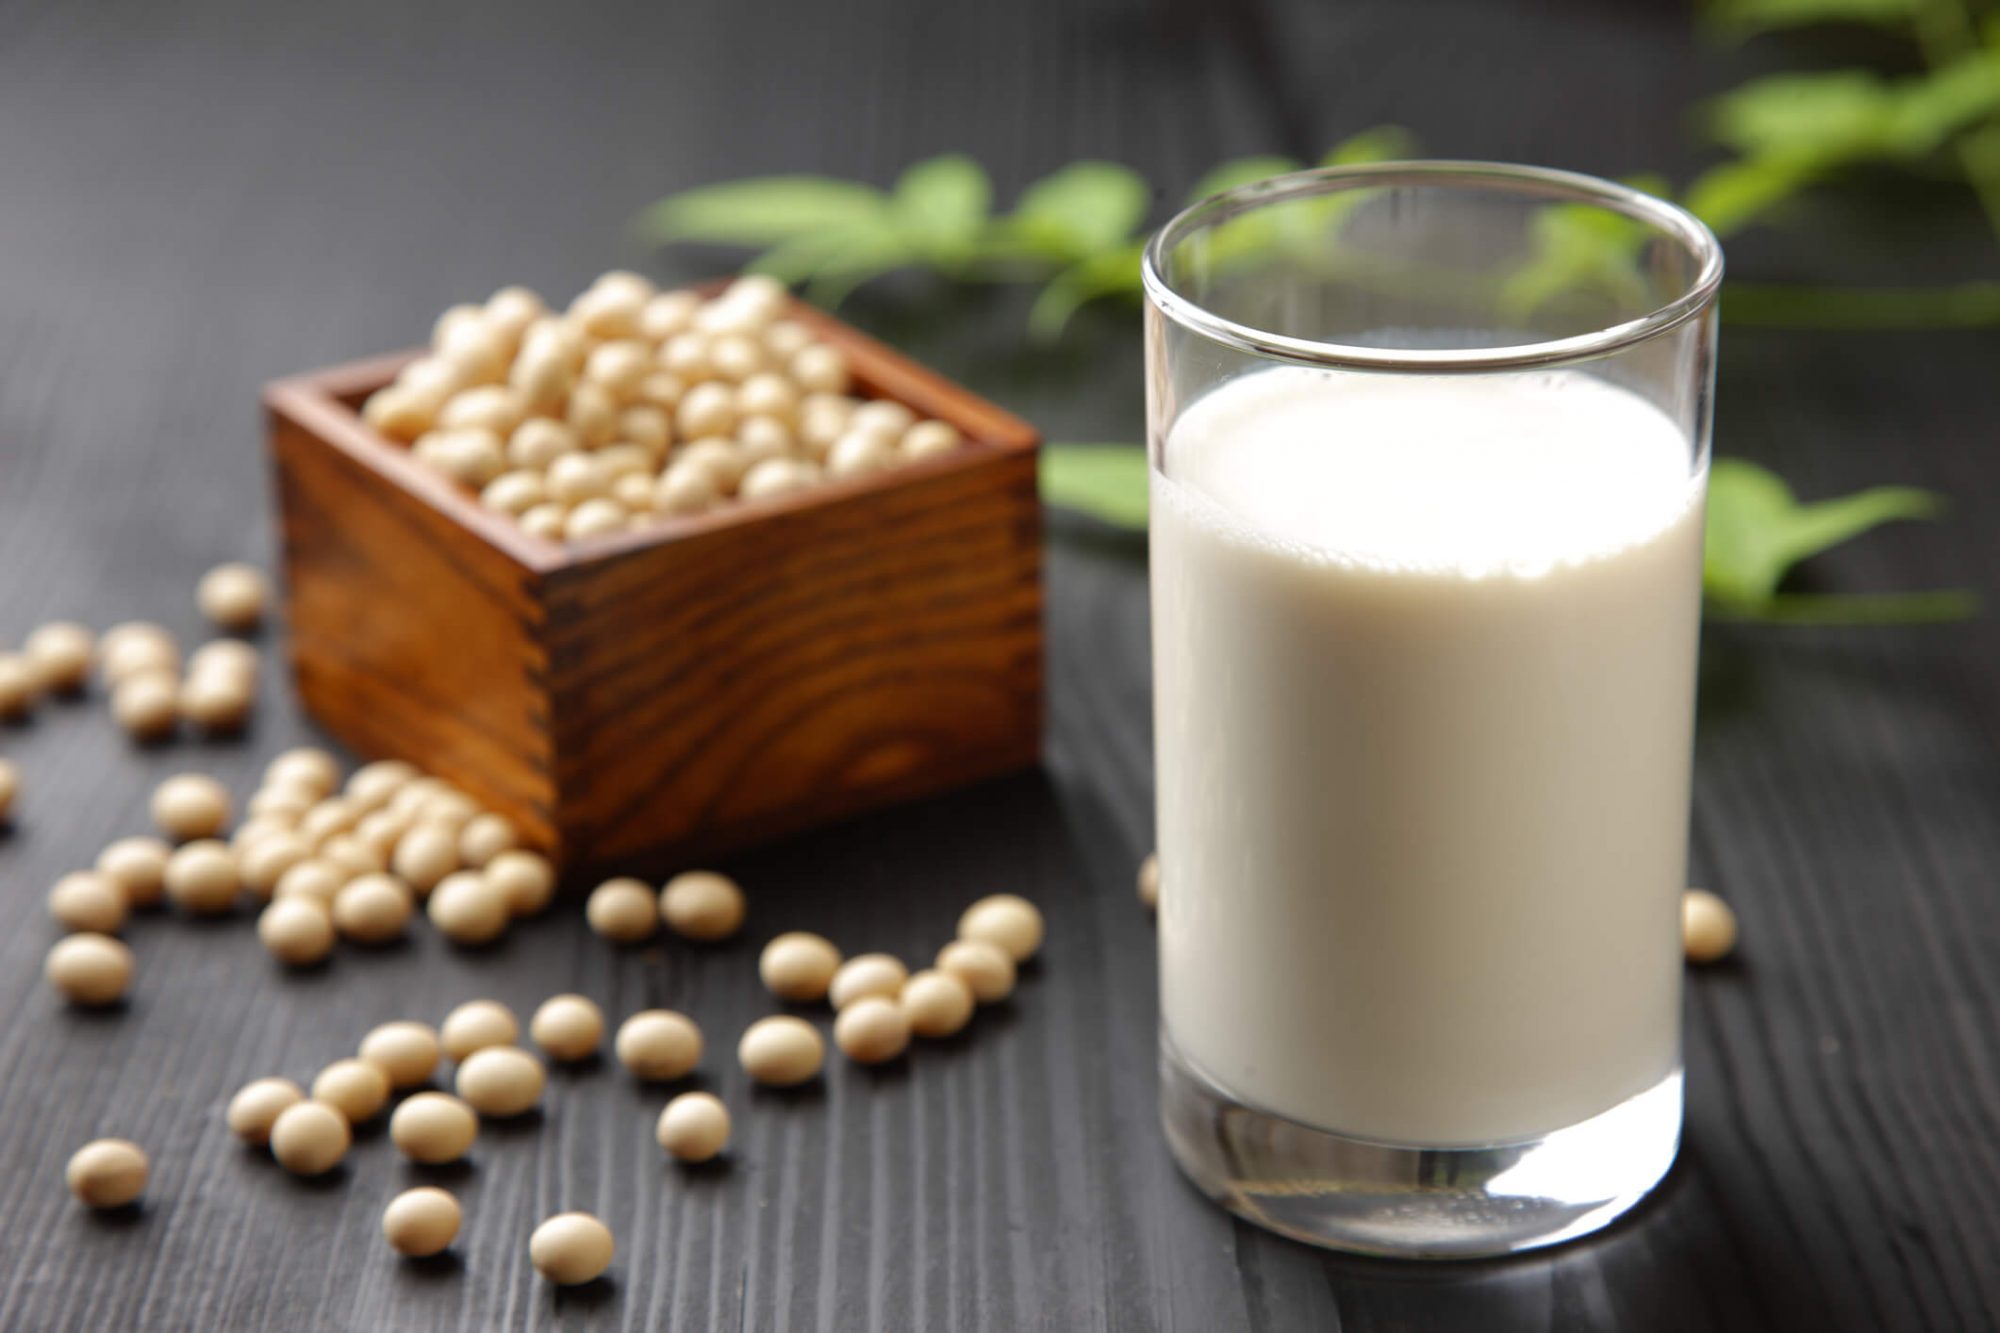 Disadvantages of soy milk